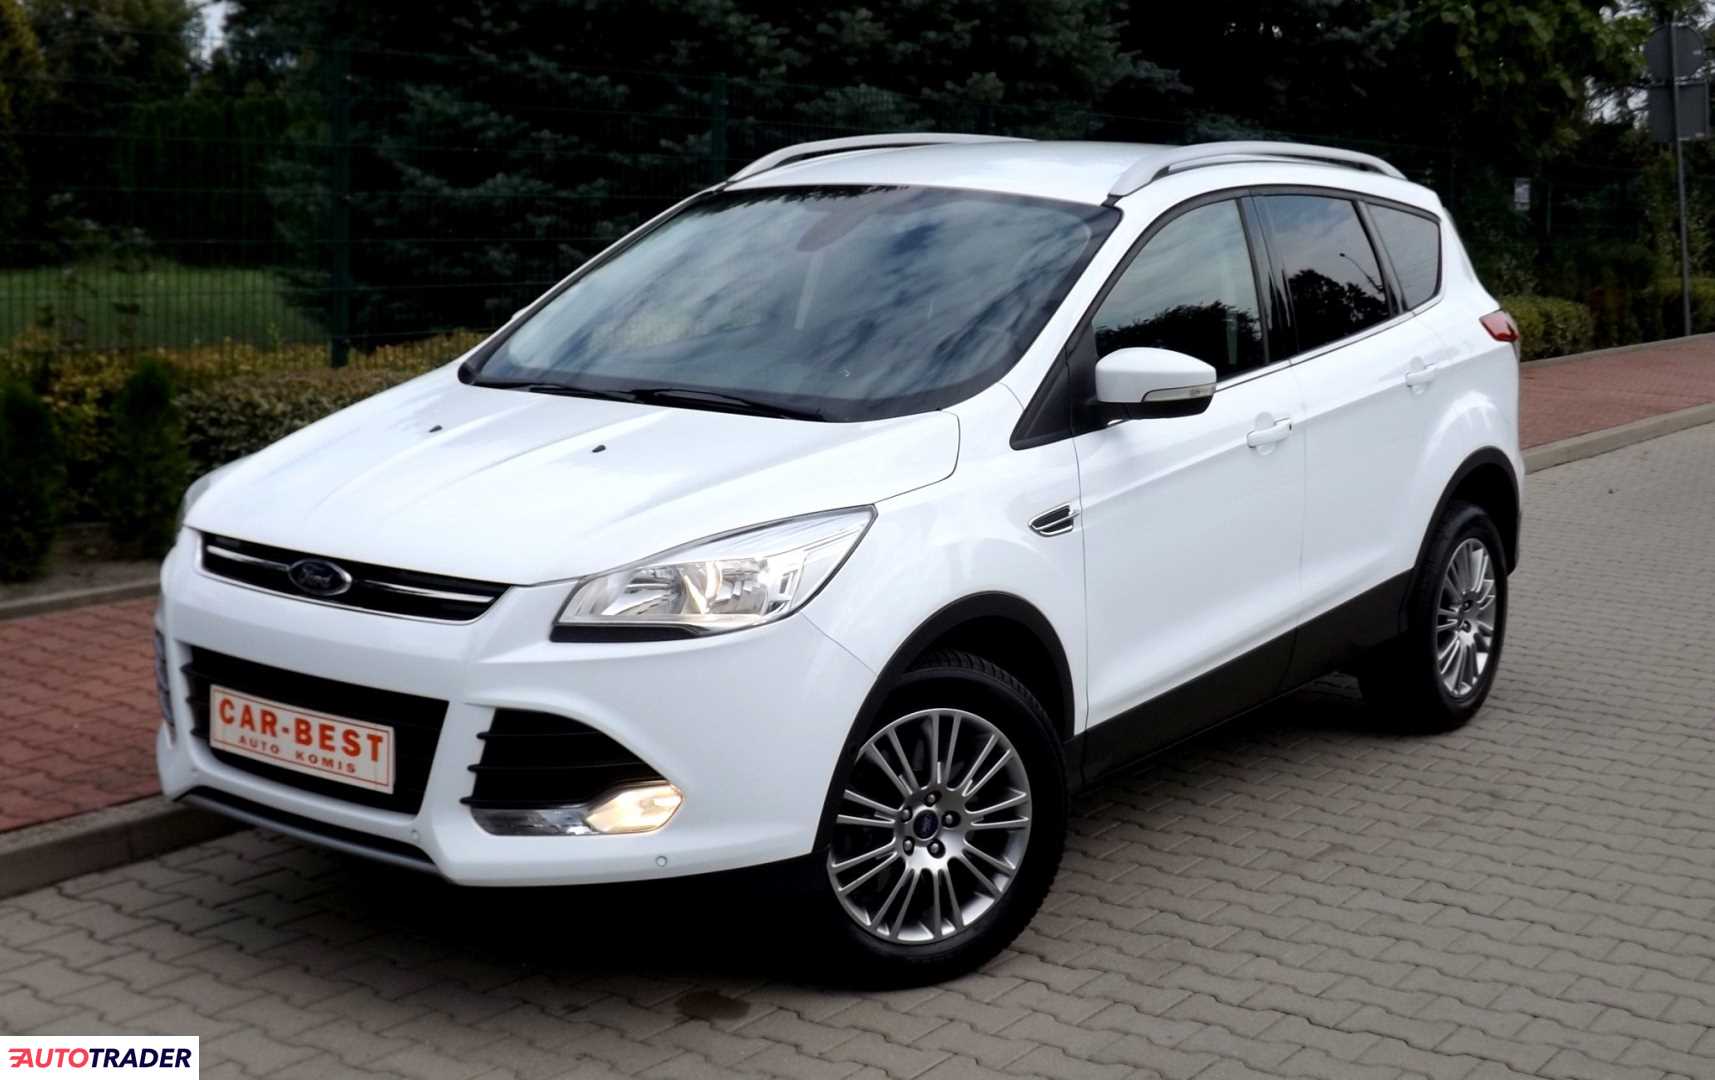 Ford Kuga 2.0 diesel 140 KM 2013r. (Żyrardów) Autotrader.pl